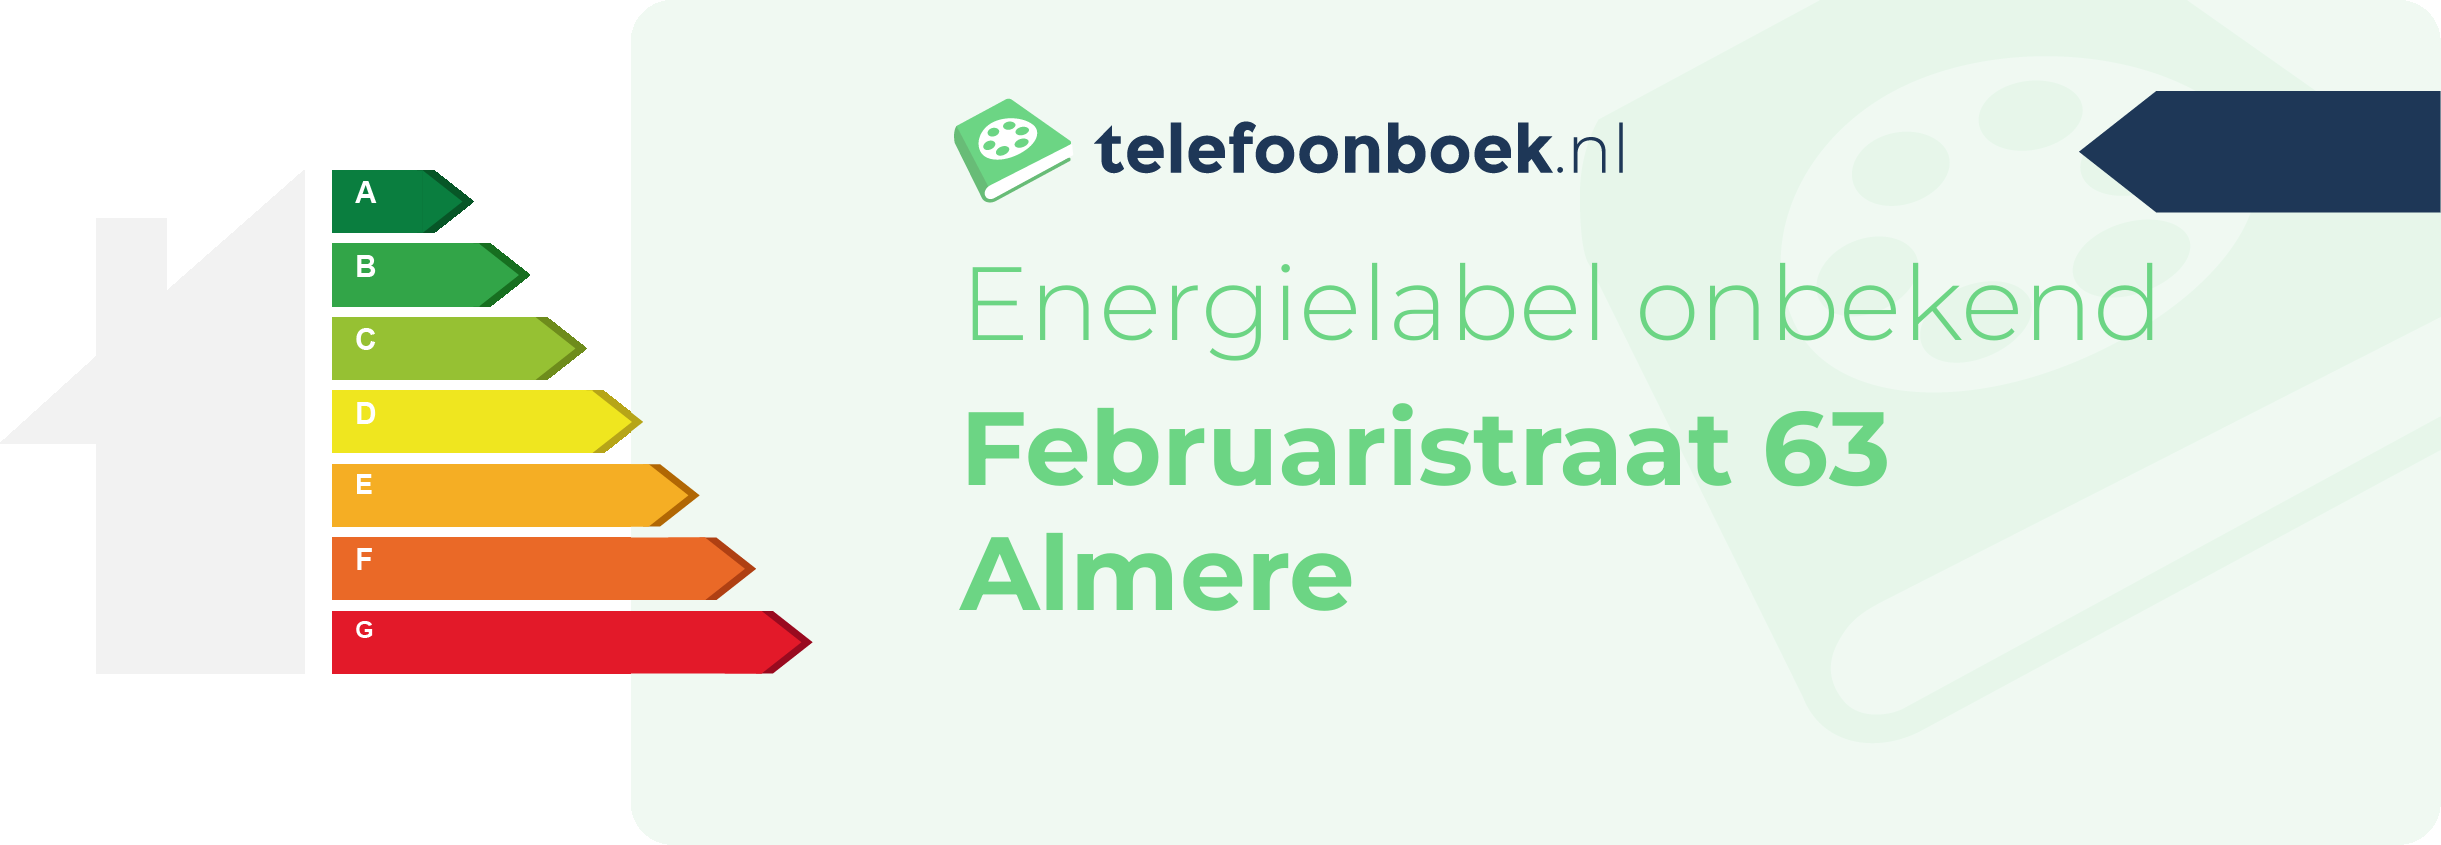 Energielabel Februaristraat 63 Almere